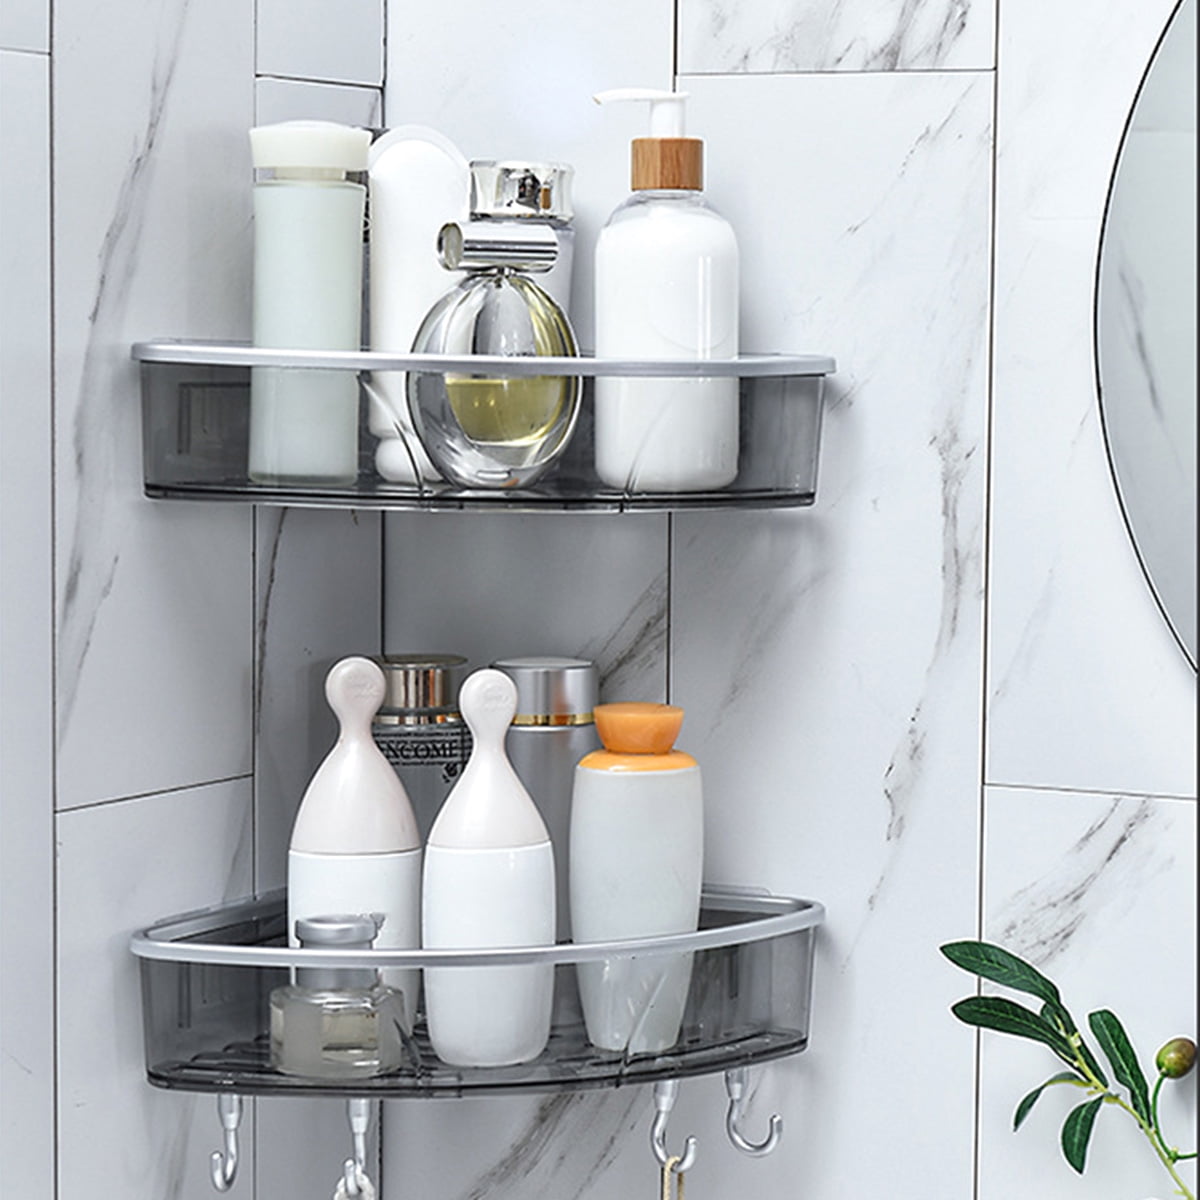 HOMEXMTD Shower Caddy Bathroom Shower Organizer - 3 Pack Self Adhesive  Shower Shelves for Inside Shower, Larger Capacity,No Drilling, Quick-Dry